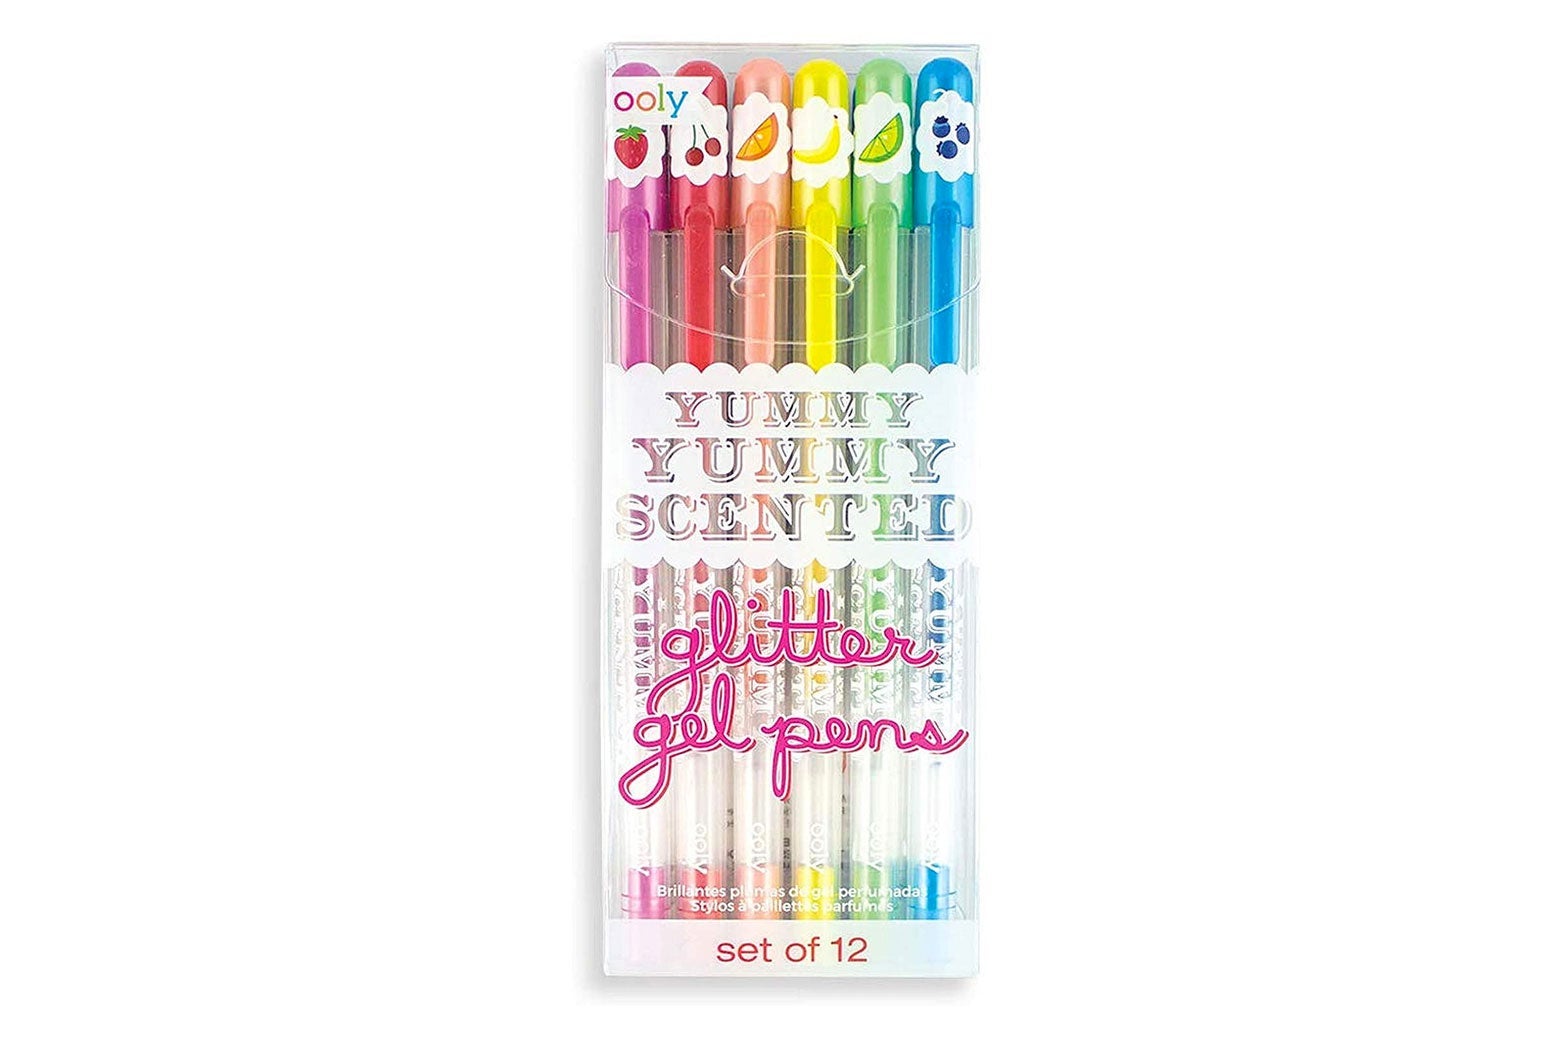 OOLY Yummy, Yummy Scented Glitter Gel Pens